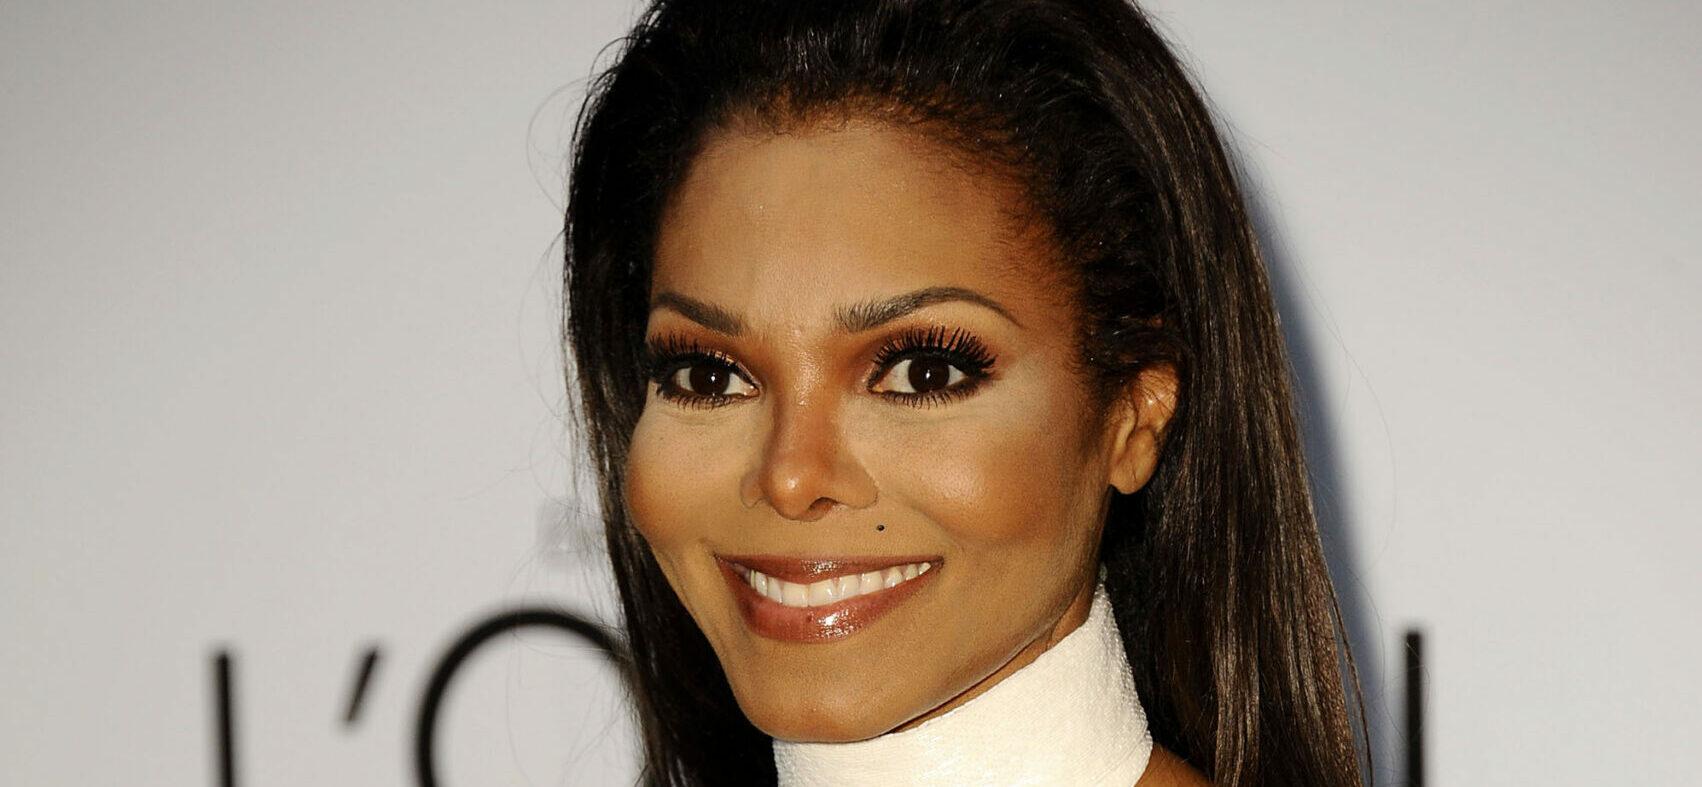 Janet Jackson smiling.